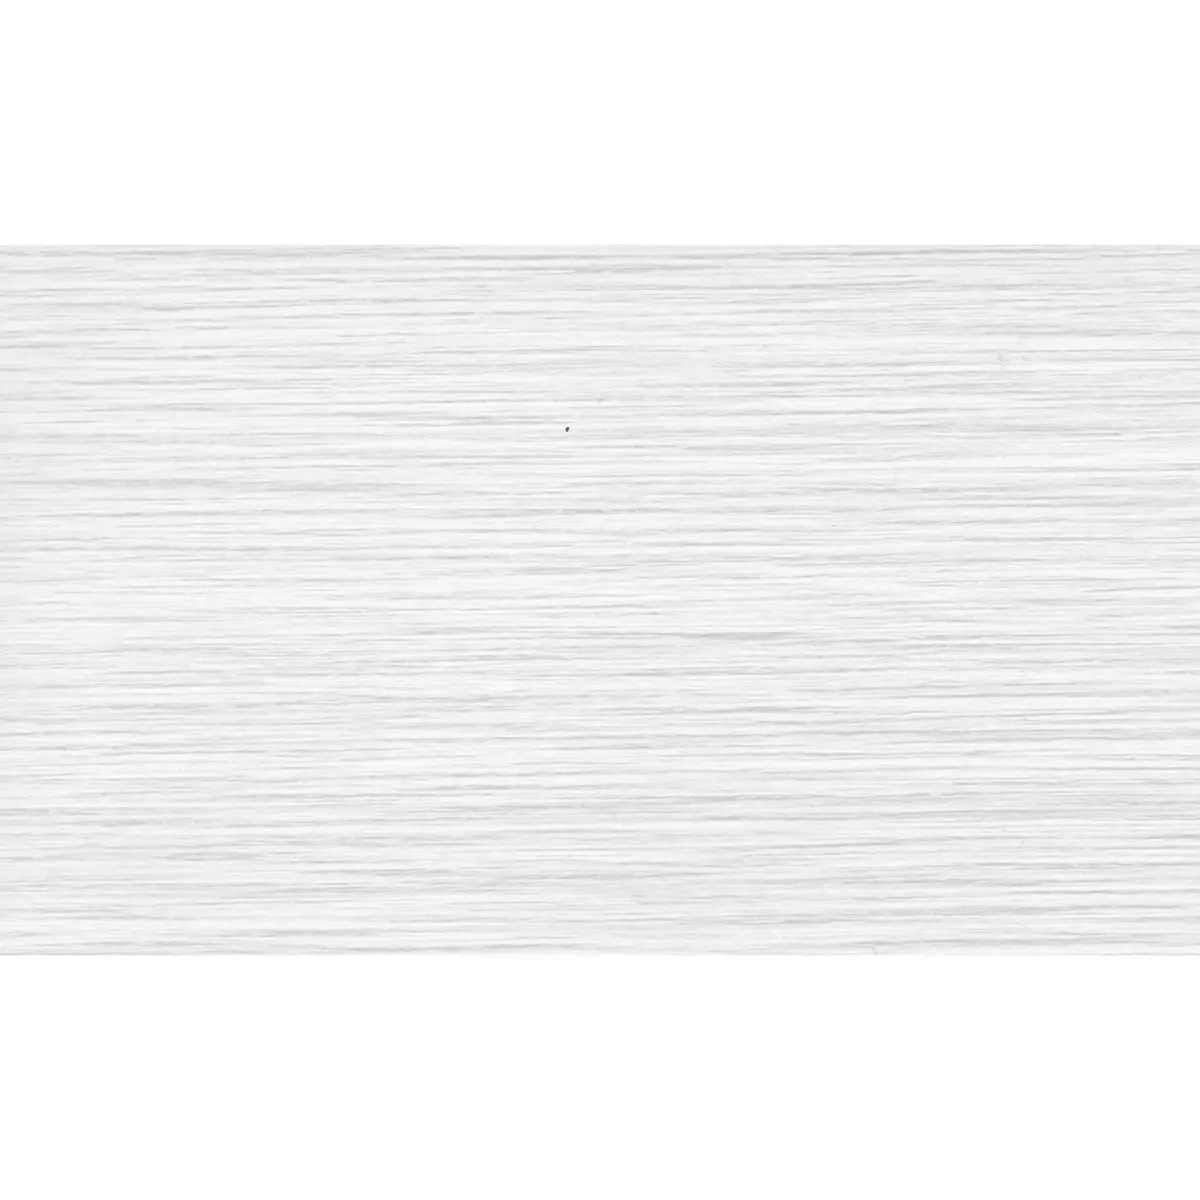 HABITABLE Adhésif décoratif Chêne blanchi - 200 x 45 cm - Blanc